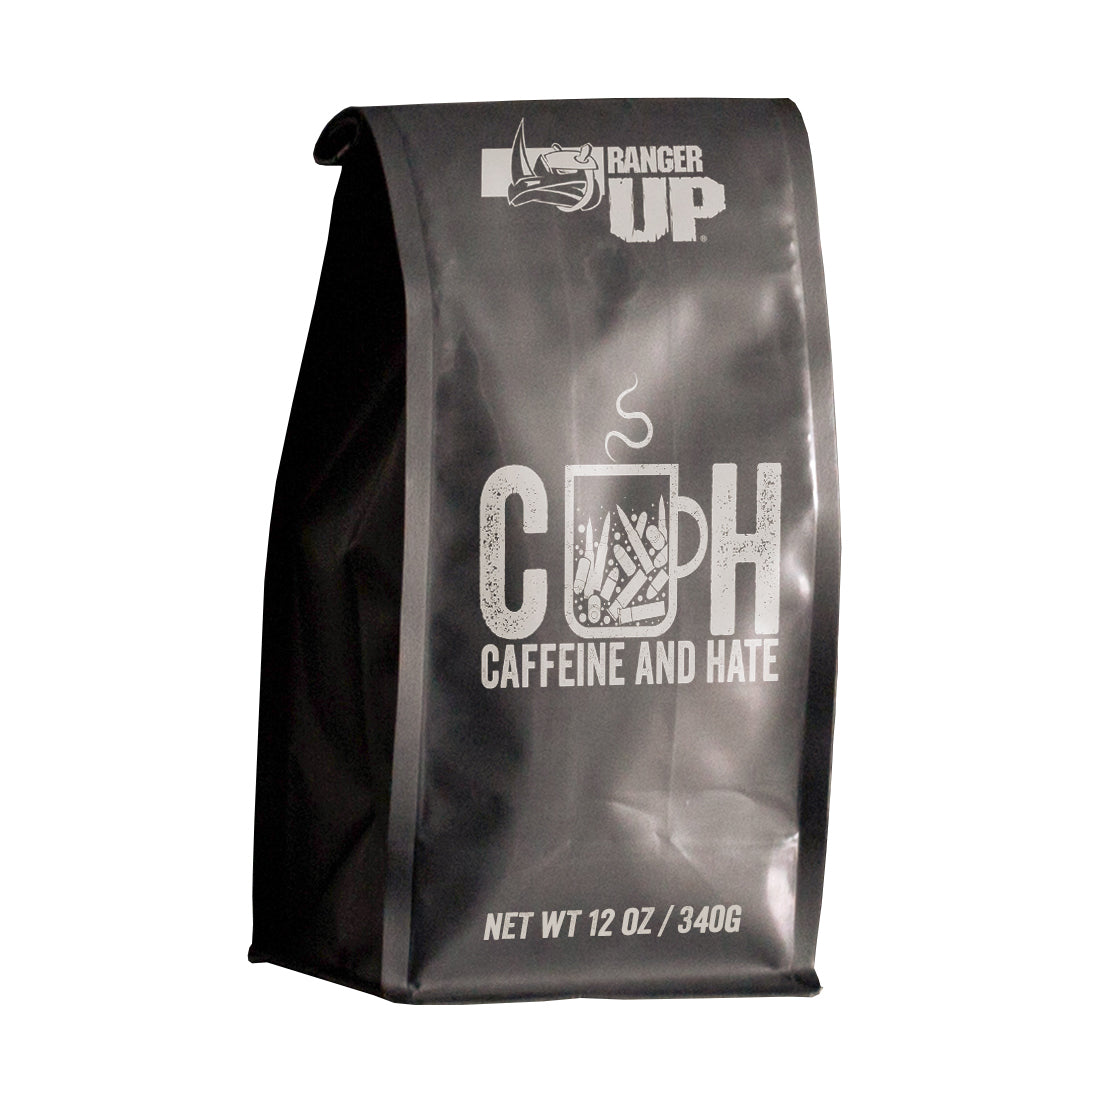 NEW: Caffeine and Hate Coffee by Black Rifle Coffee Company